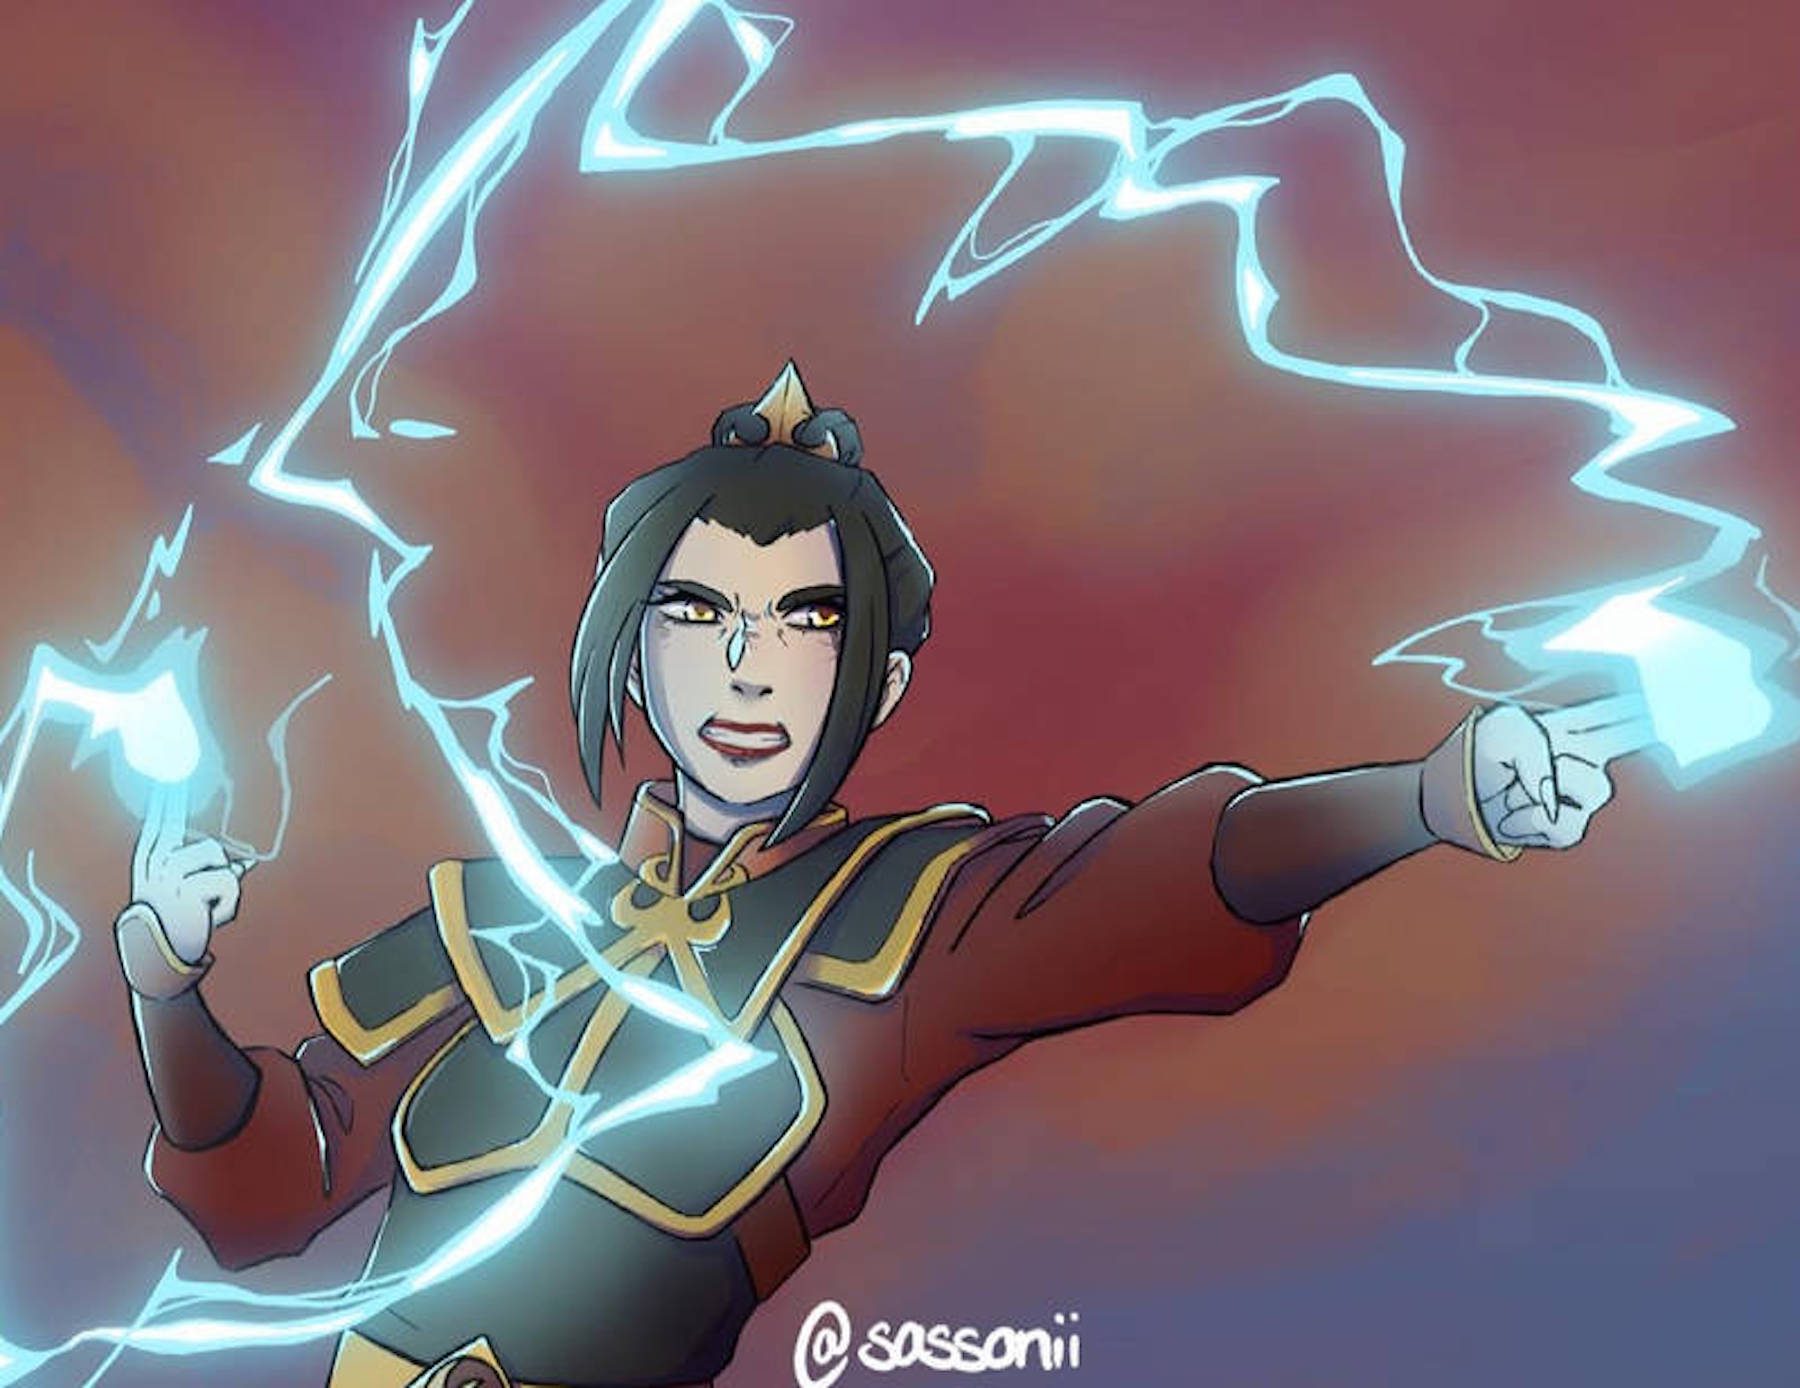 Depiction of lightningbending power in Avatar series.